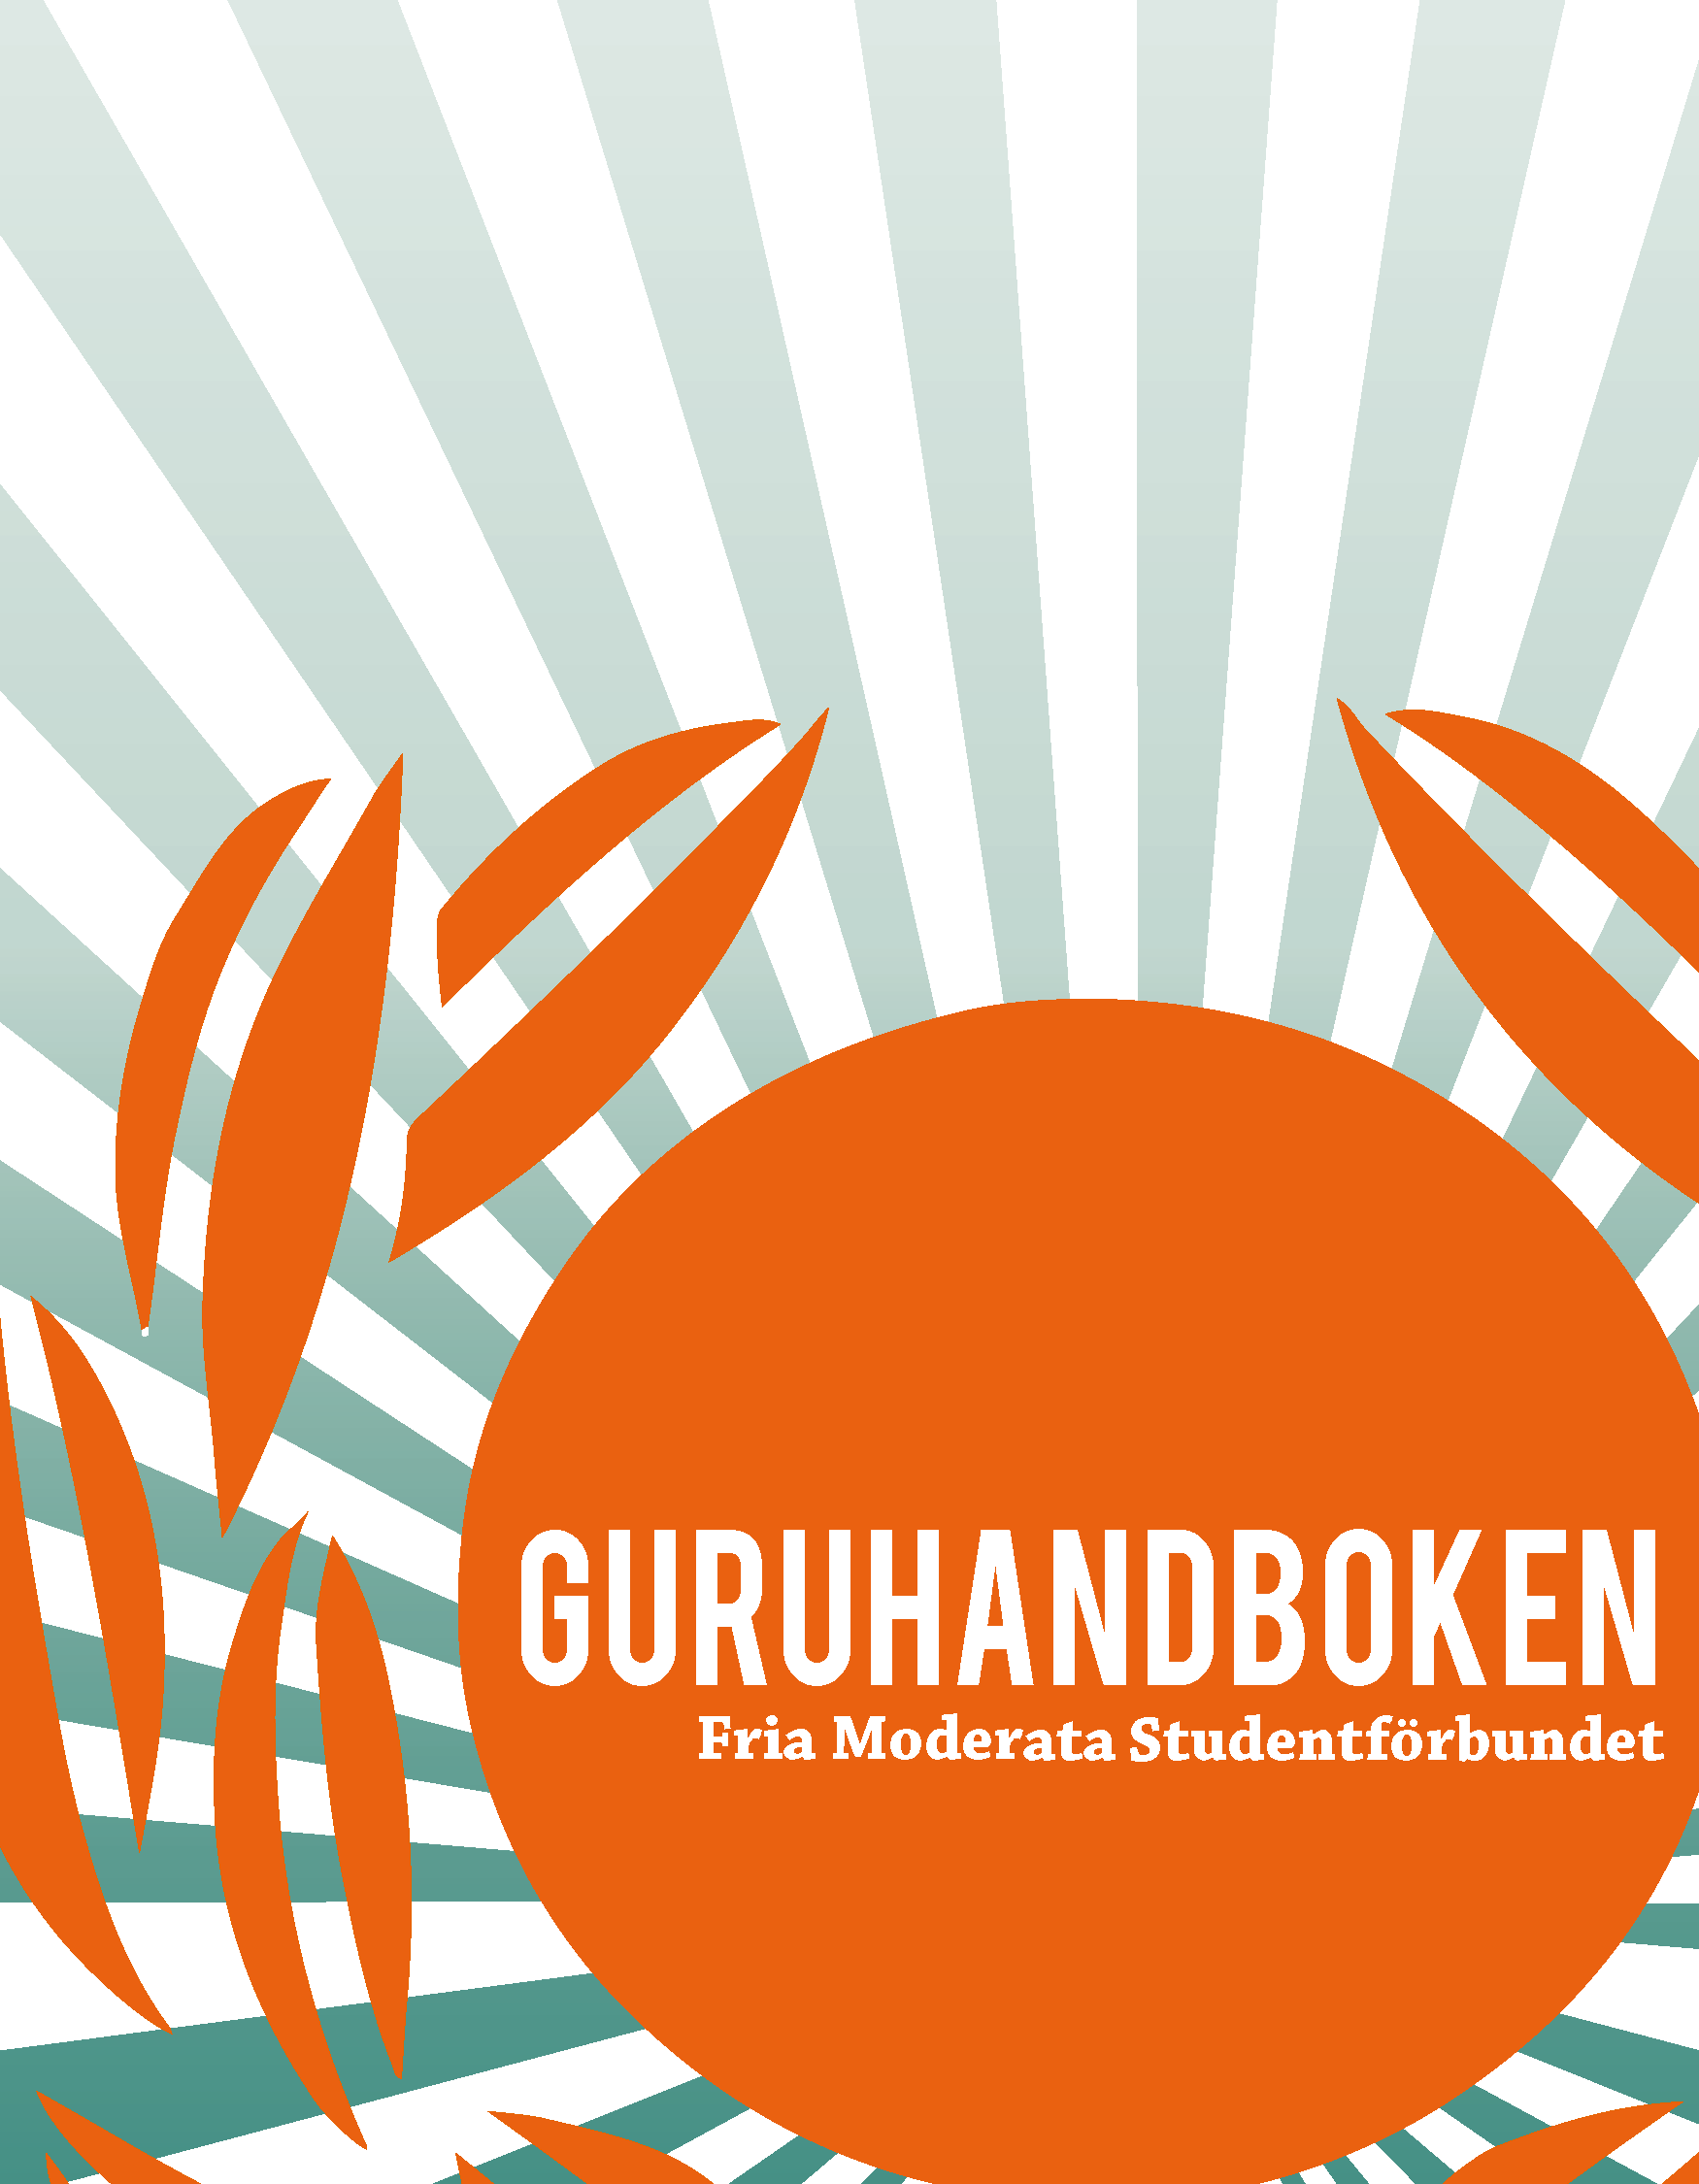 You are currently viewing Nylansering: Guruhandboken!